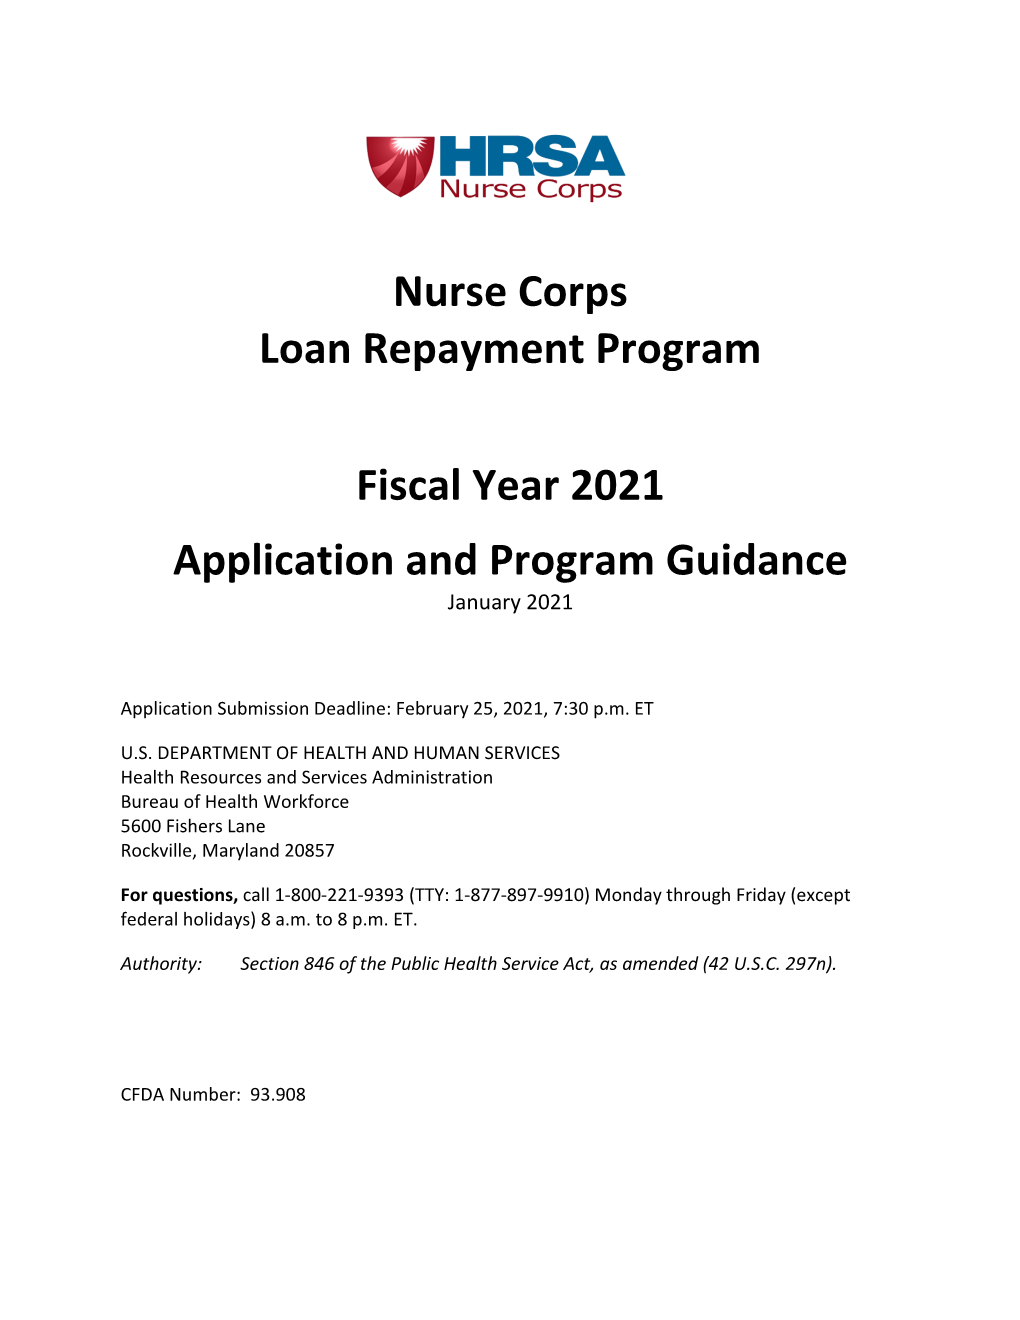 Nurse Corps Loan Repayment Program Guidance